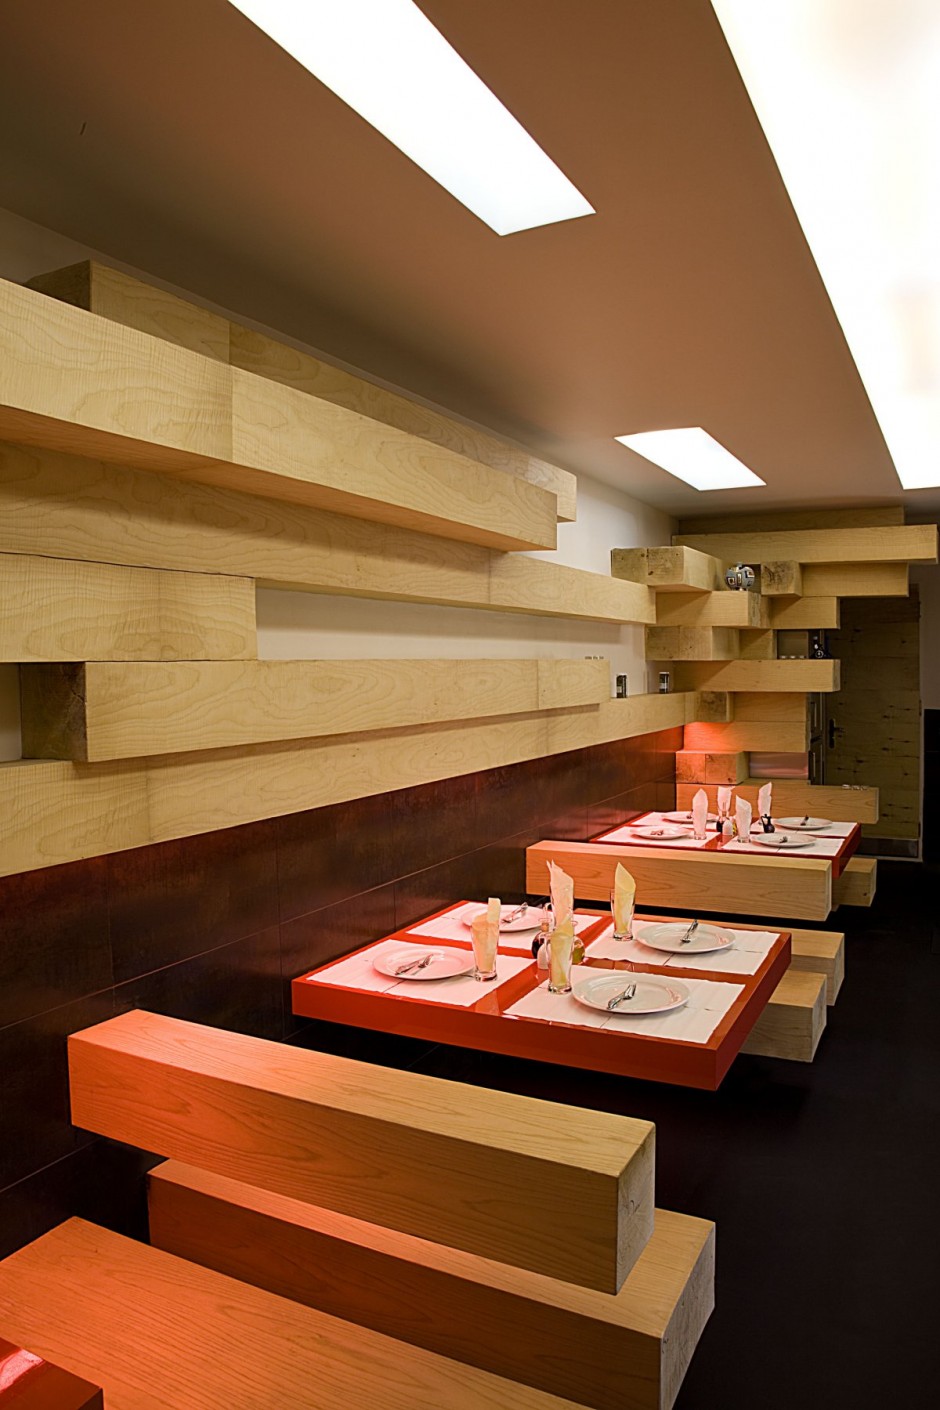 Korean restaurant interior - interior design company 'design danaham'